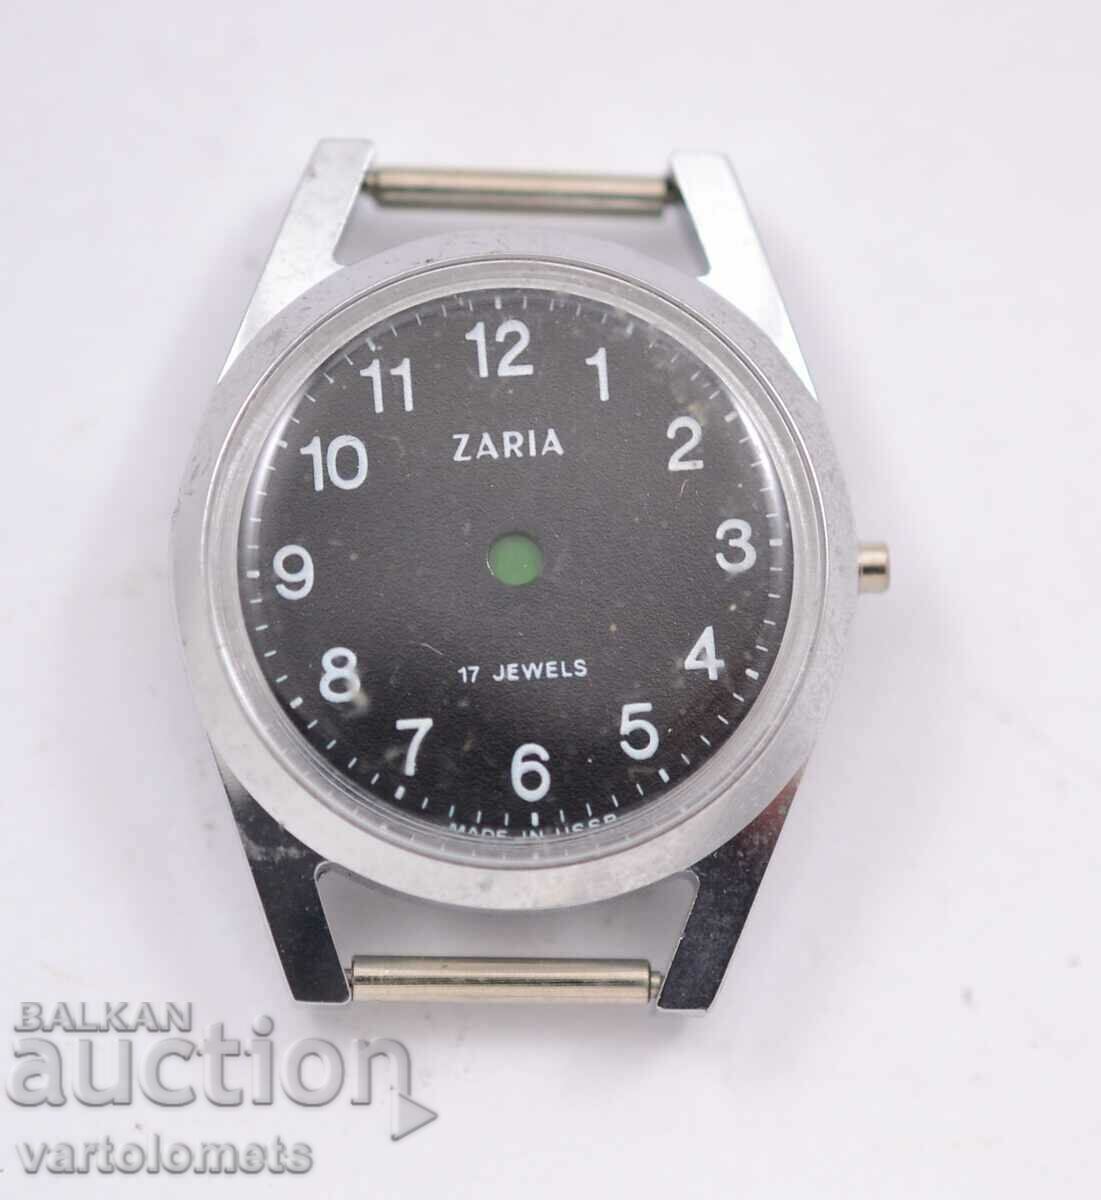 ZARYA women's watch case and dial - unused